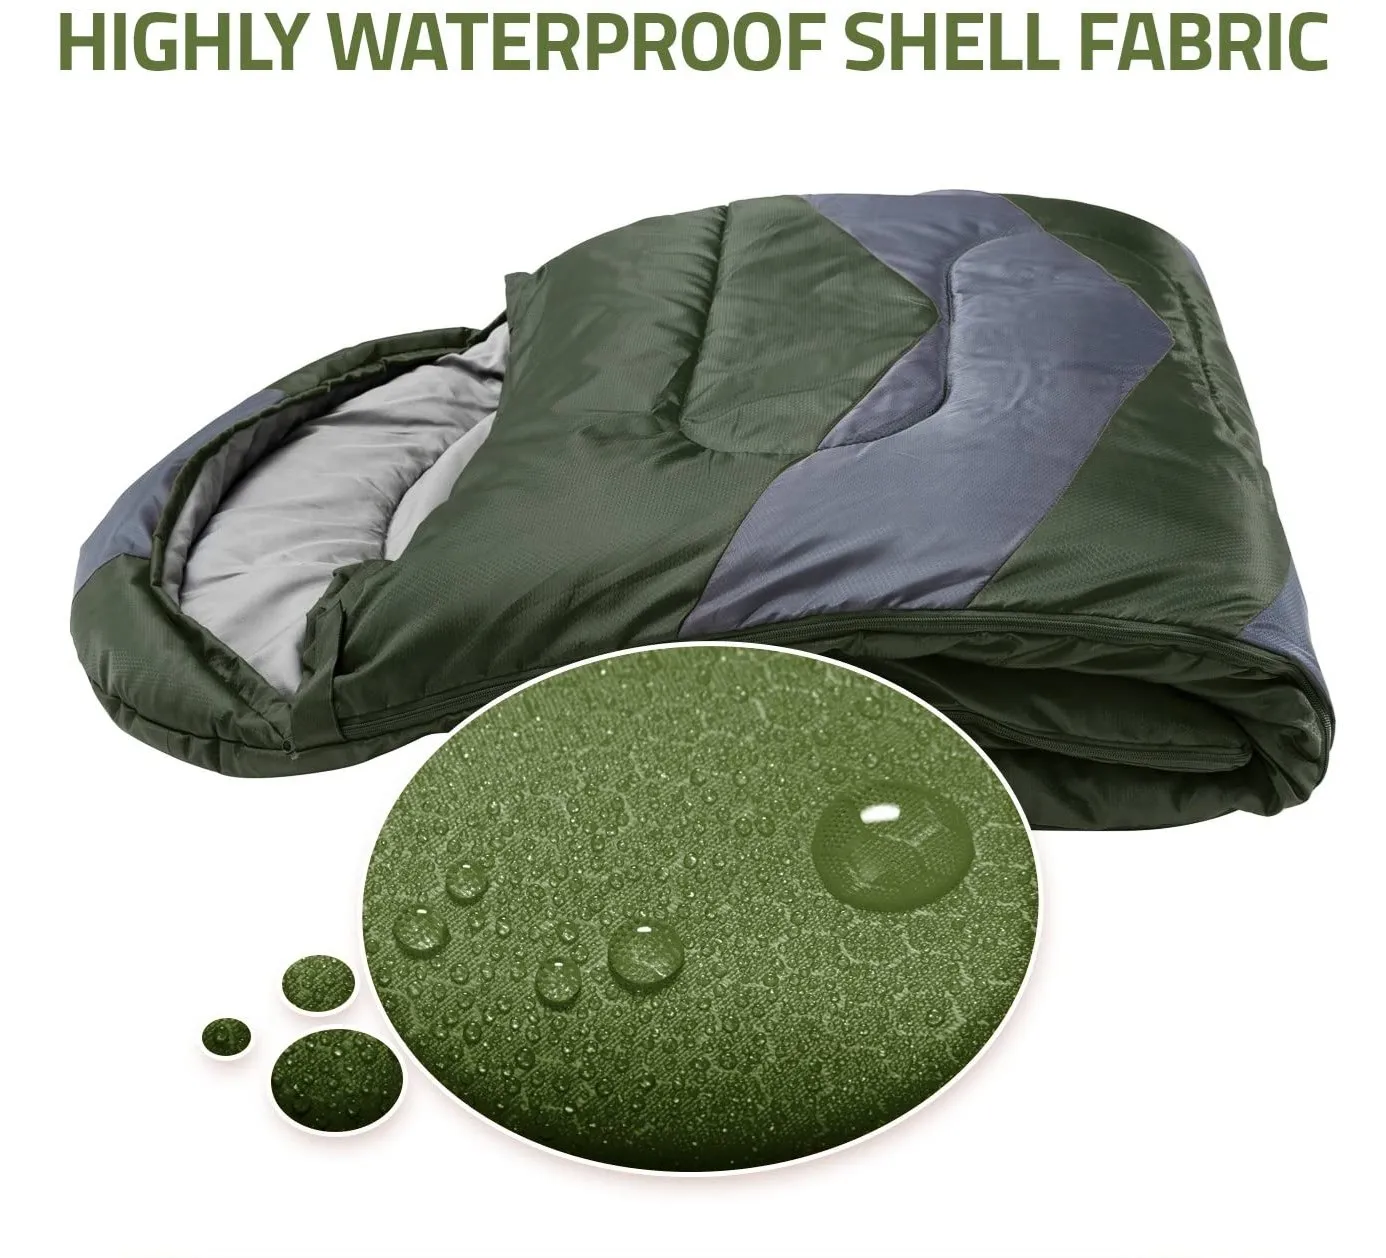 Woqi Outdoor sleeping bag outdoor camping 190T polyester 300g/200g cotton waterproof sleeping bag